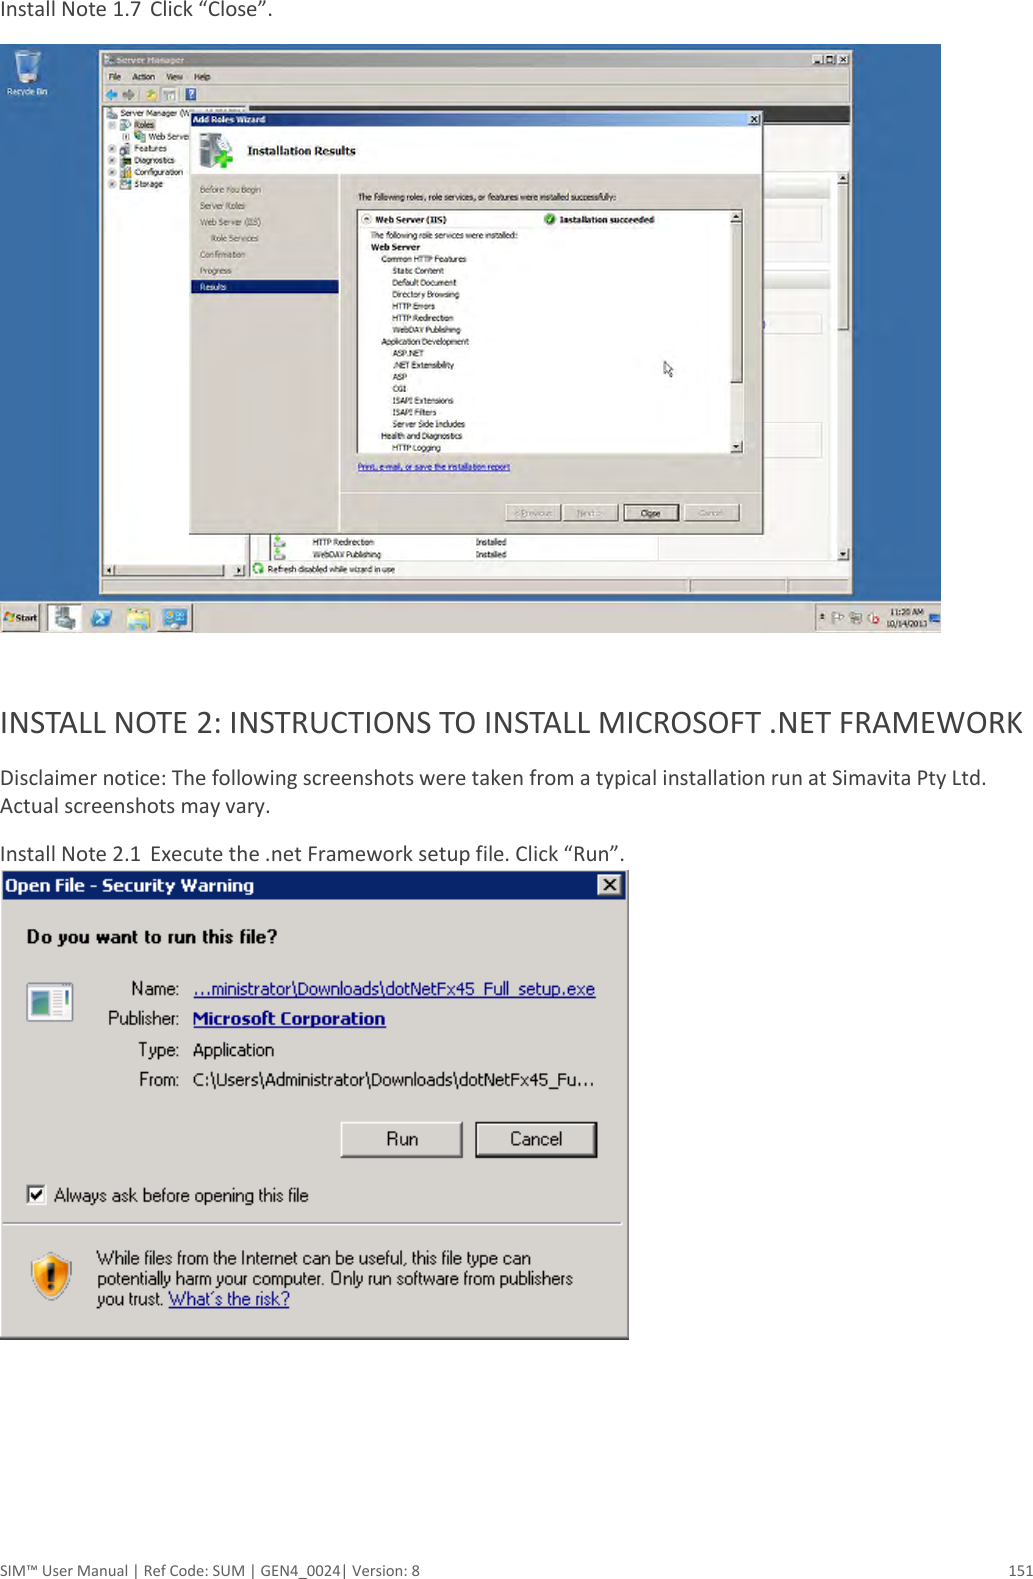  SIM™ User Manual | Ref Code: SUM | GEN4_0024| Version: 8  151 Install Note 1.7  Click “Close”.   INSTALL NOTE 2: INSTRUCTIONS TO INSTALL MICROSOFT .NET FRAMEWORK Disclaimer notice: The following screenshots were taken from a typical installation run at Simavita Pty Ltd. Actual screenshots may vary. Install Note 2.1  Execute the .net Framework setup file. Click “Run”.      